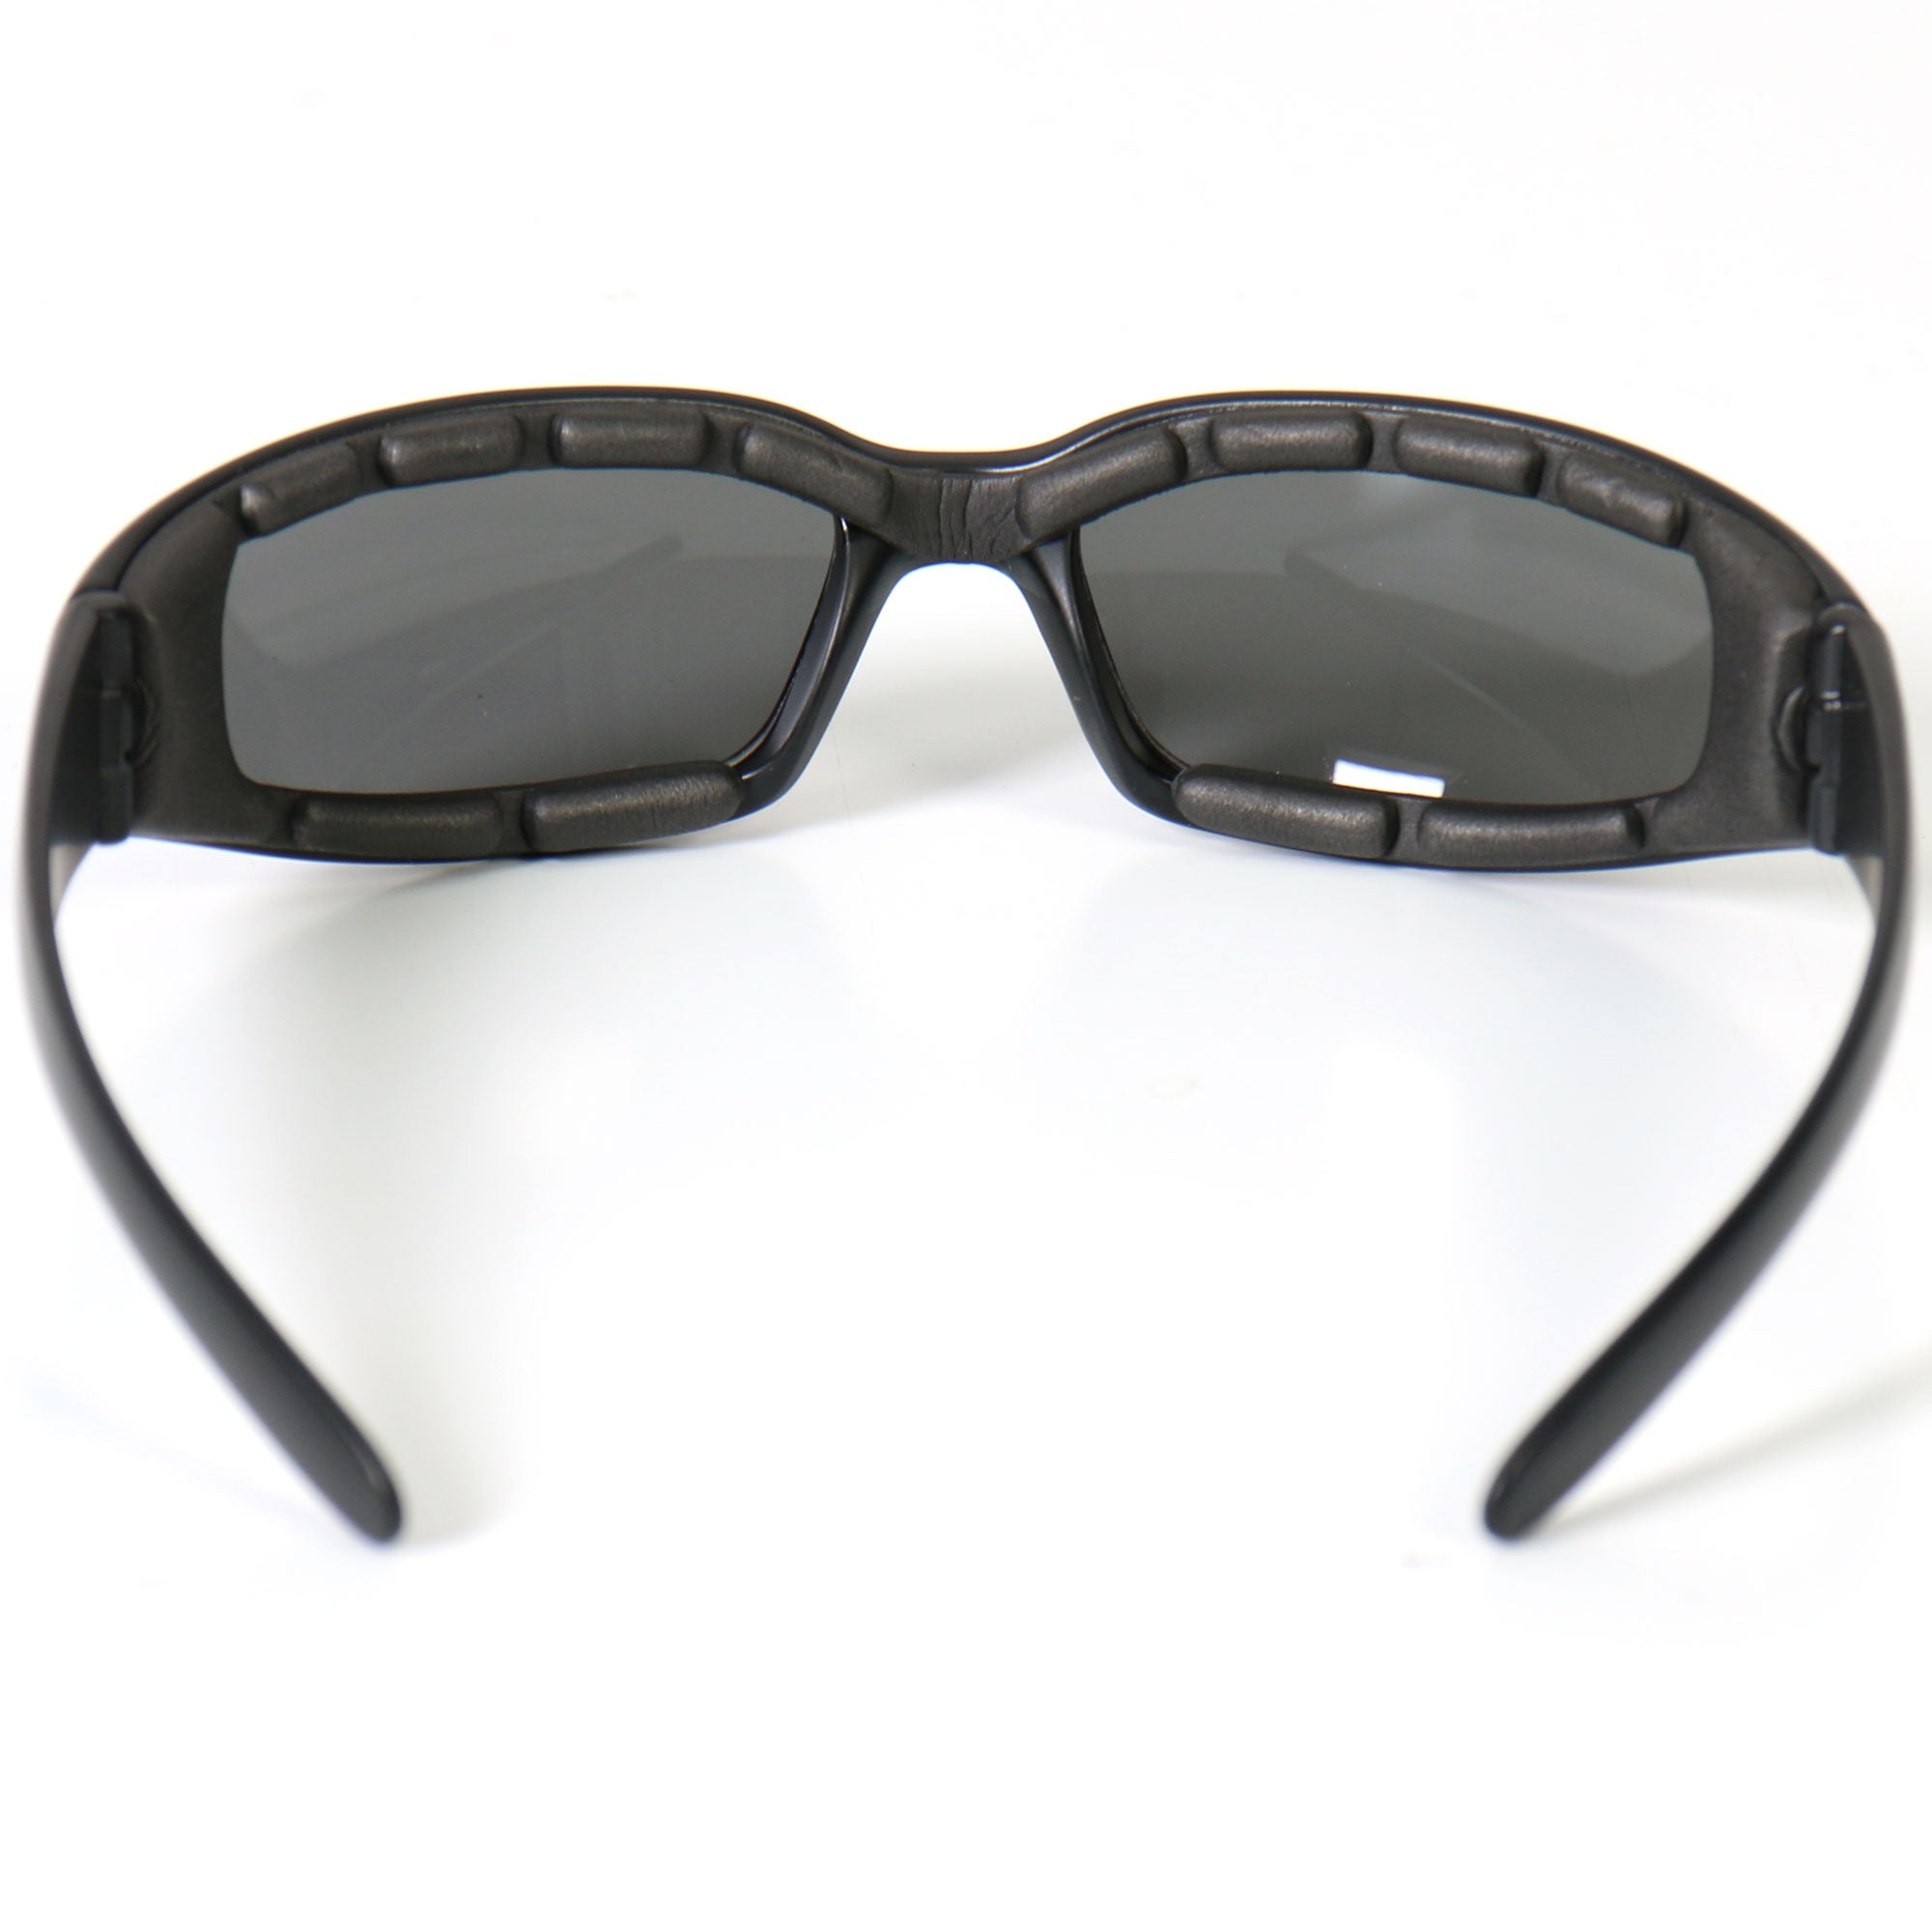 Hot Leathers Chicago Riding Sunglasses w/Smoke Lenses